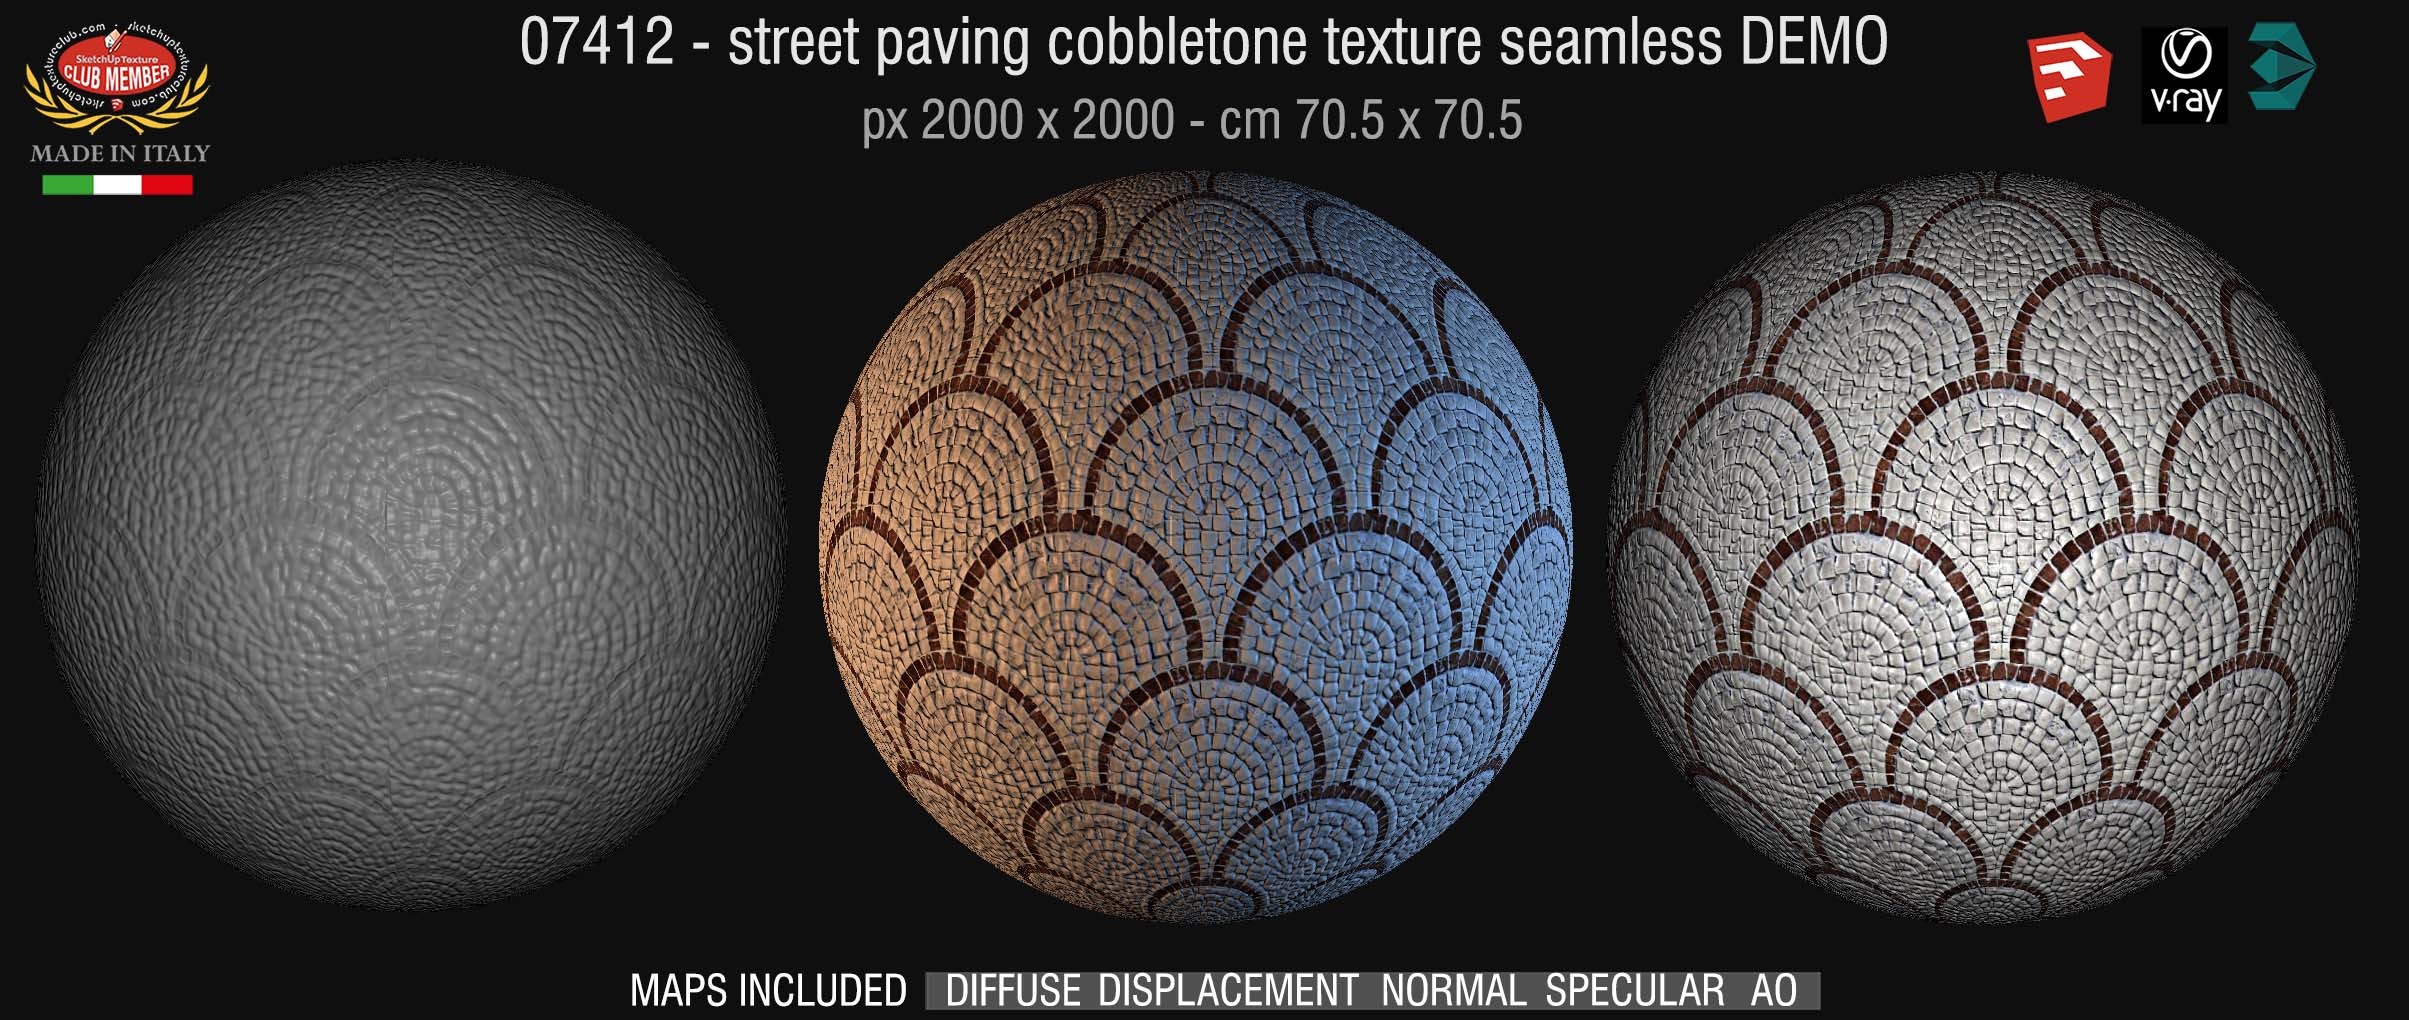 07412 HR Street paving cobblestone texture + maps DEMO